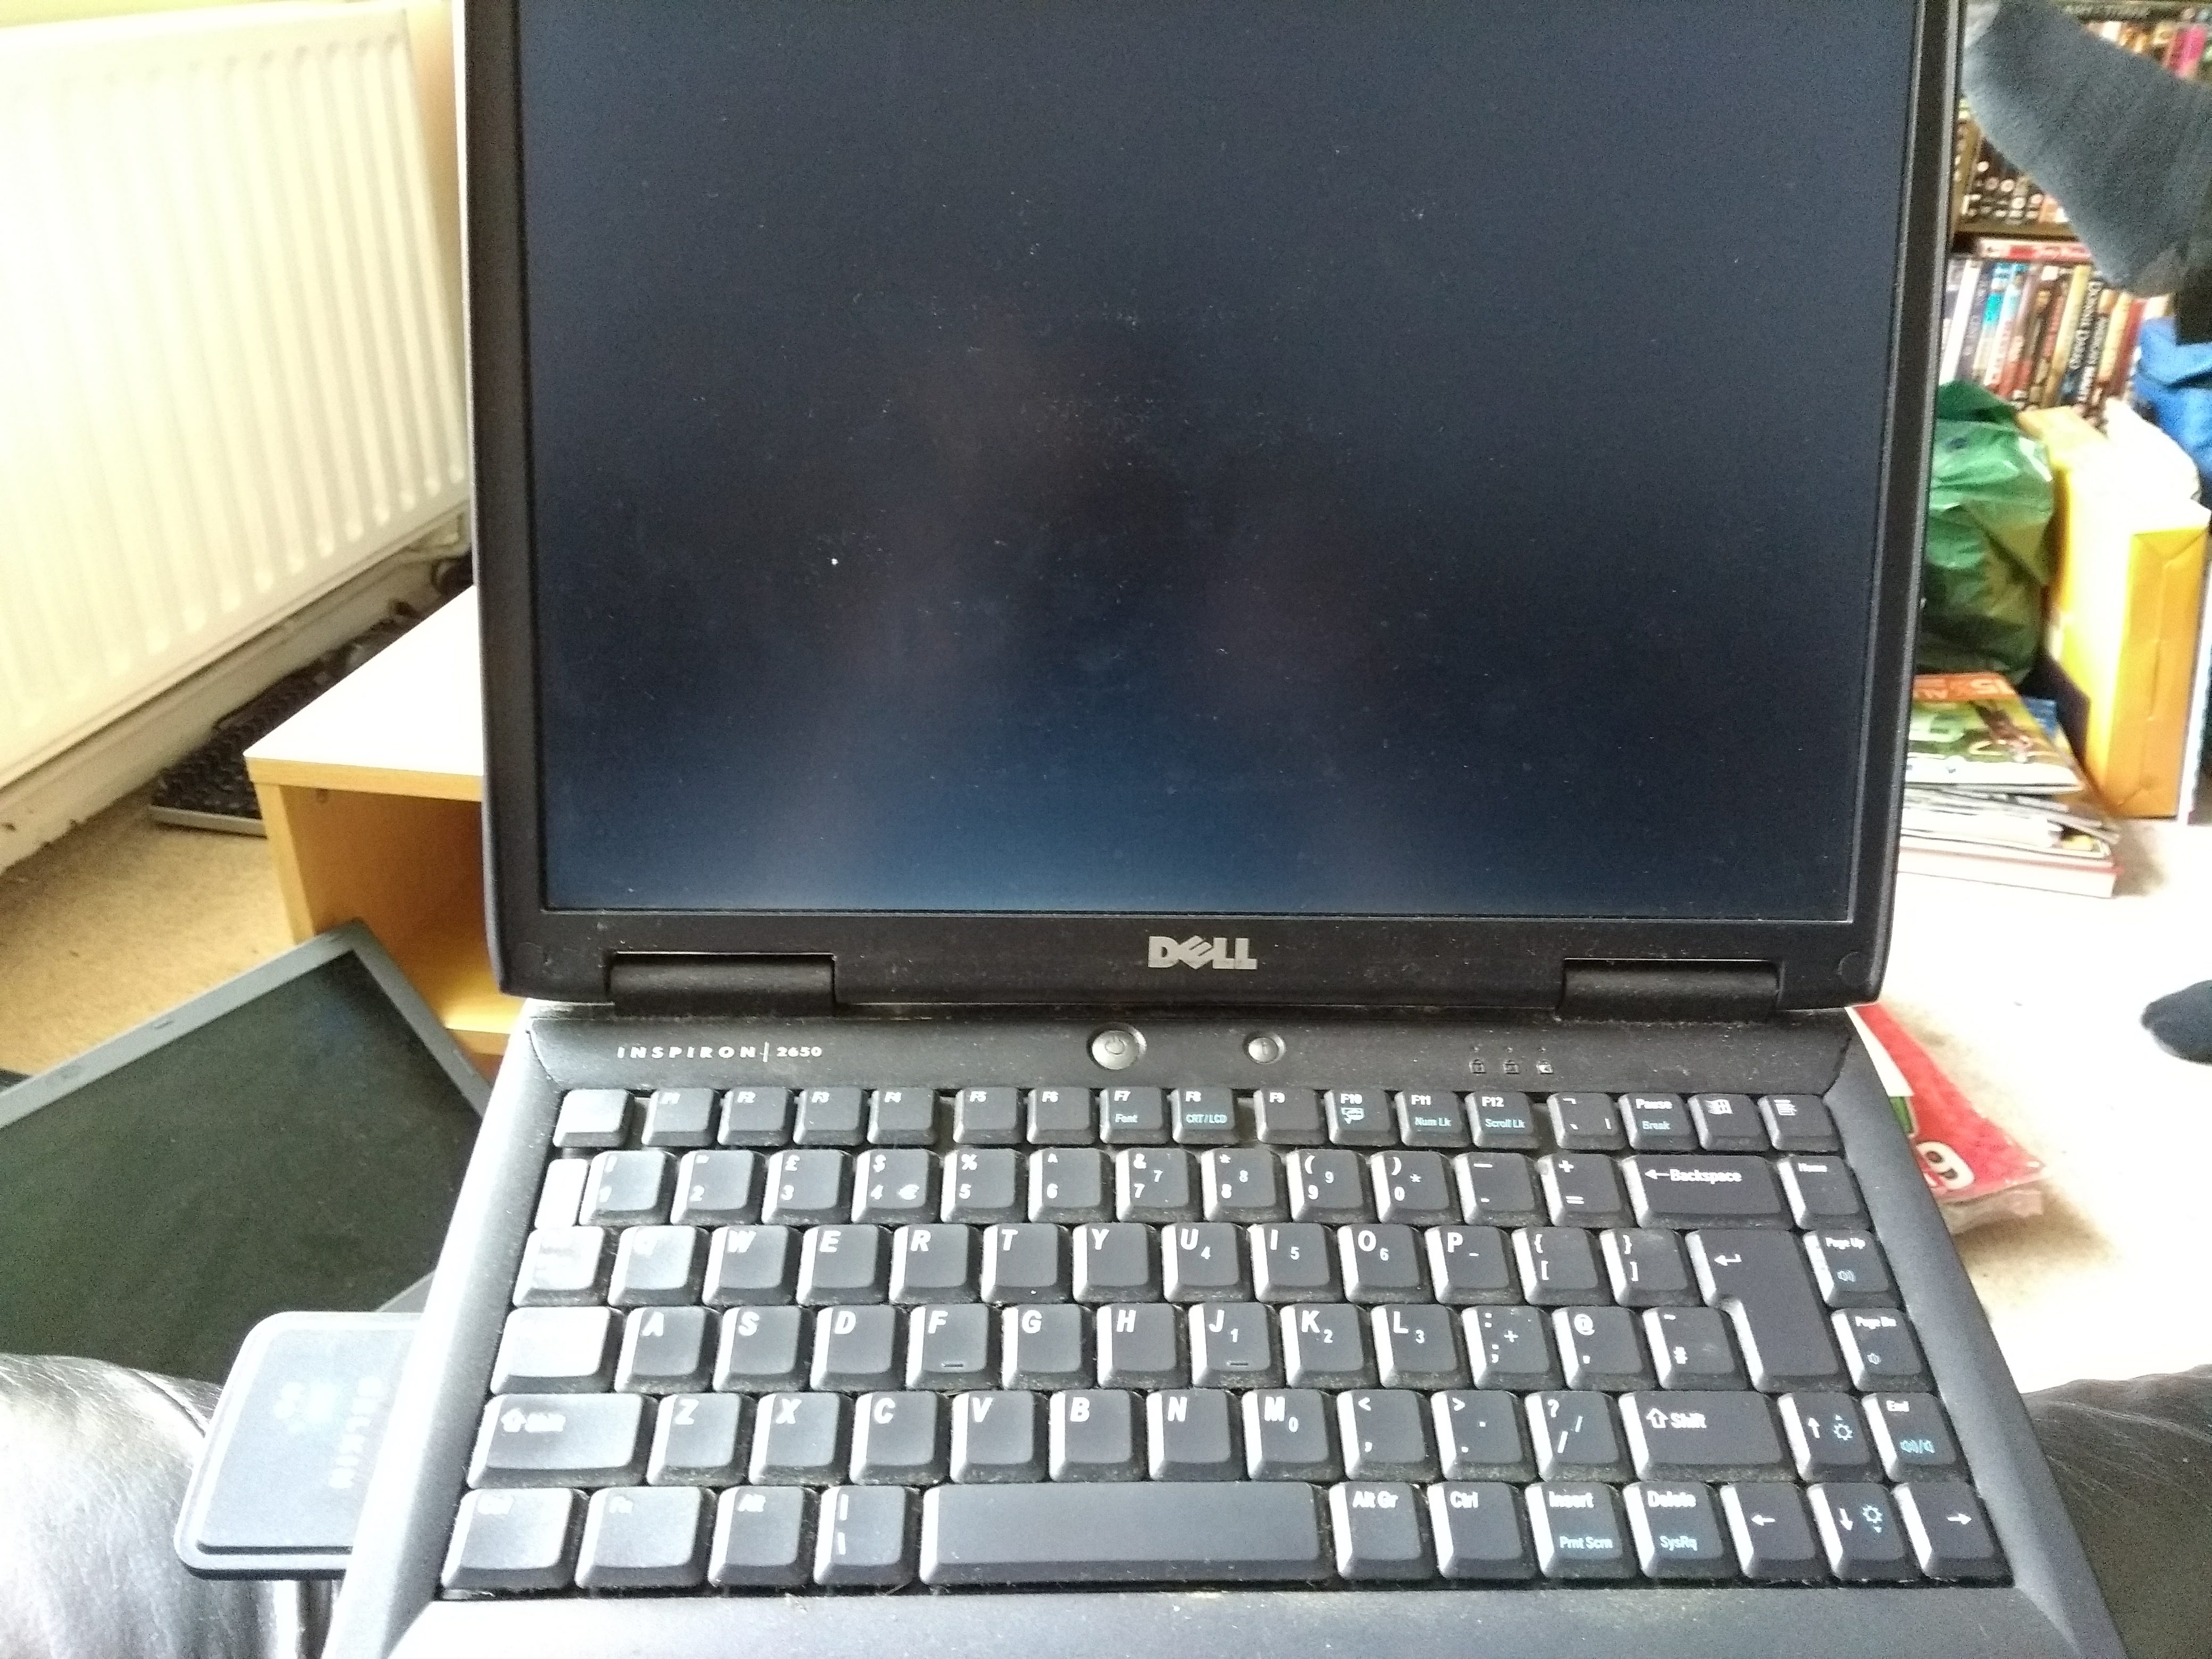 The Laptop